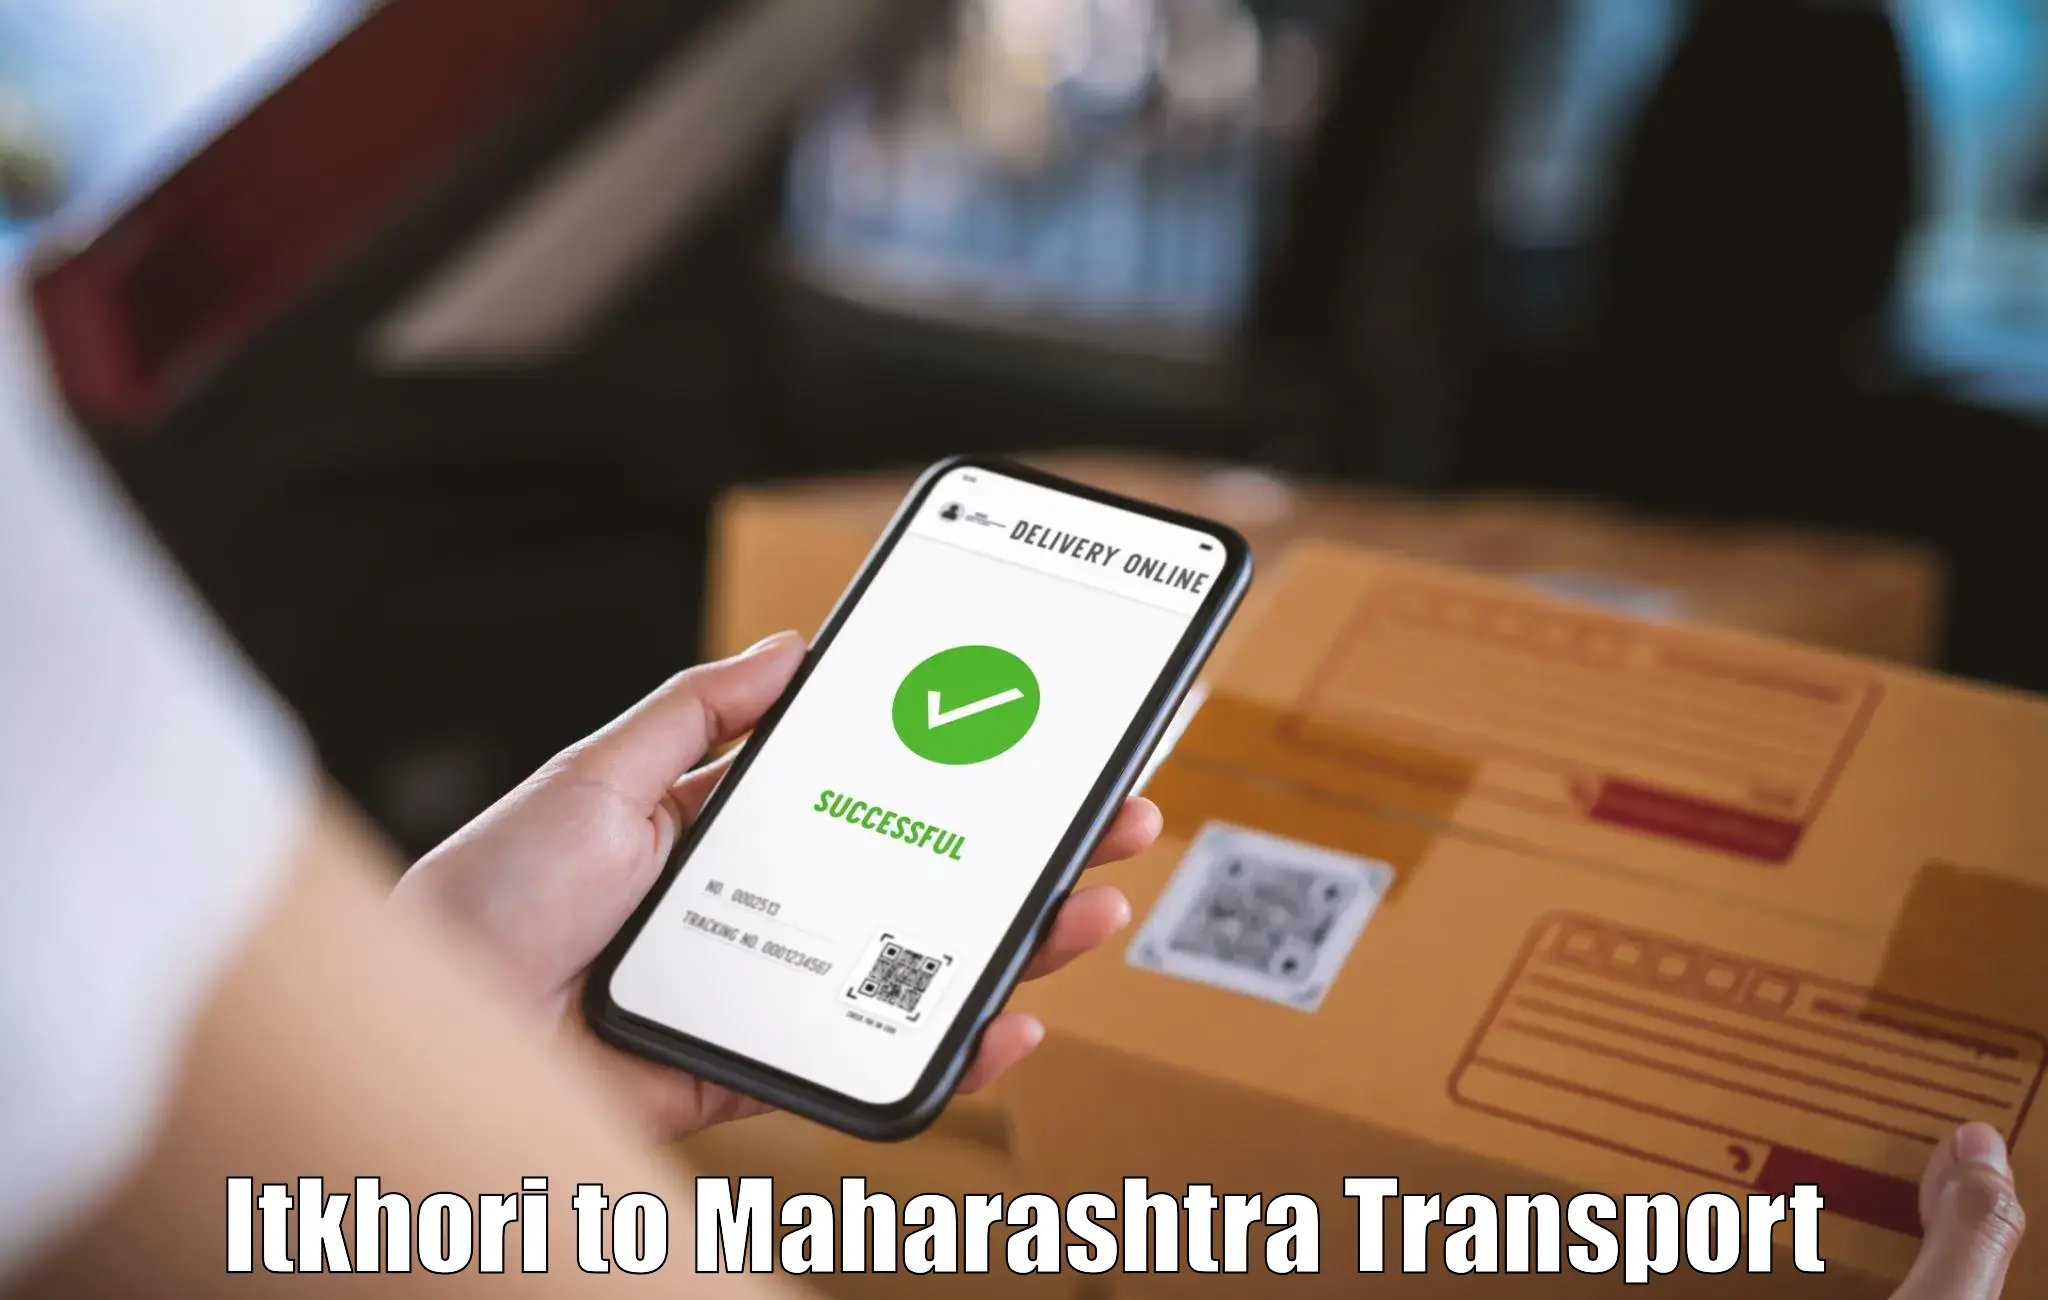 Nearest transport service Itkhori to Maharashtra